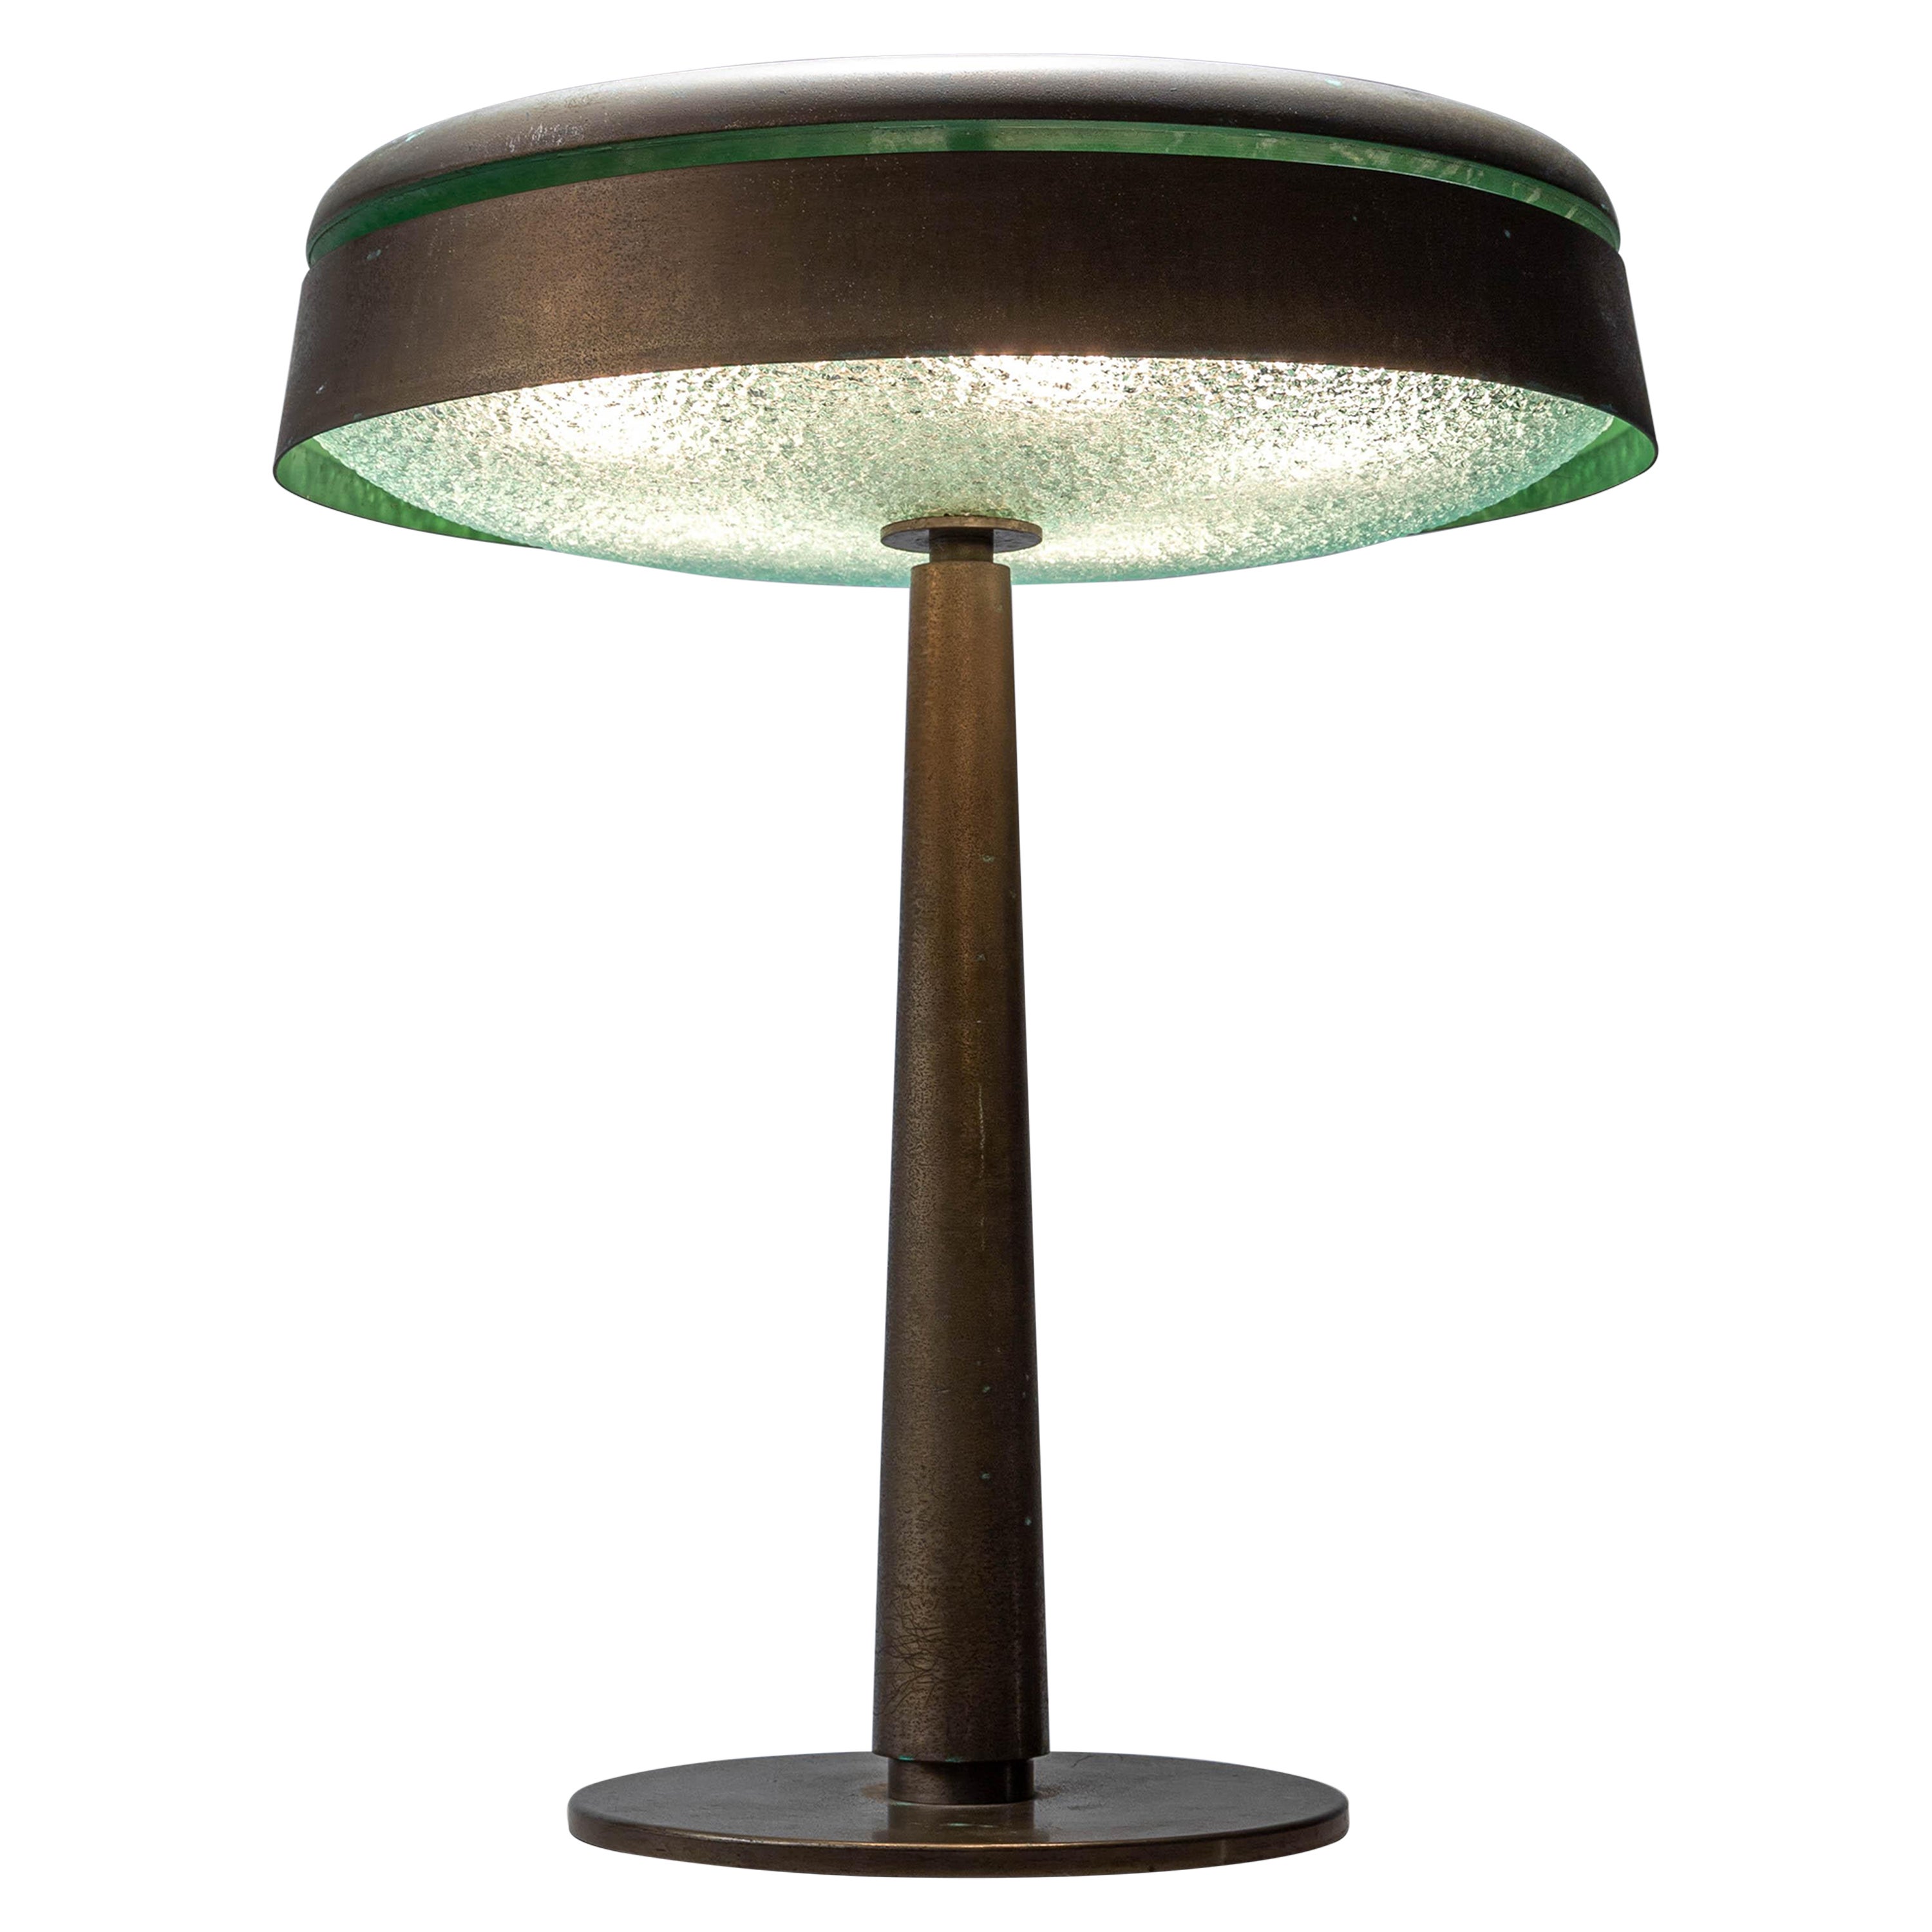 Max Ingrand Table Lamp #2278 for Fontana Arte, Italy, 1960